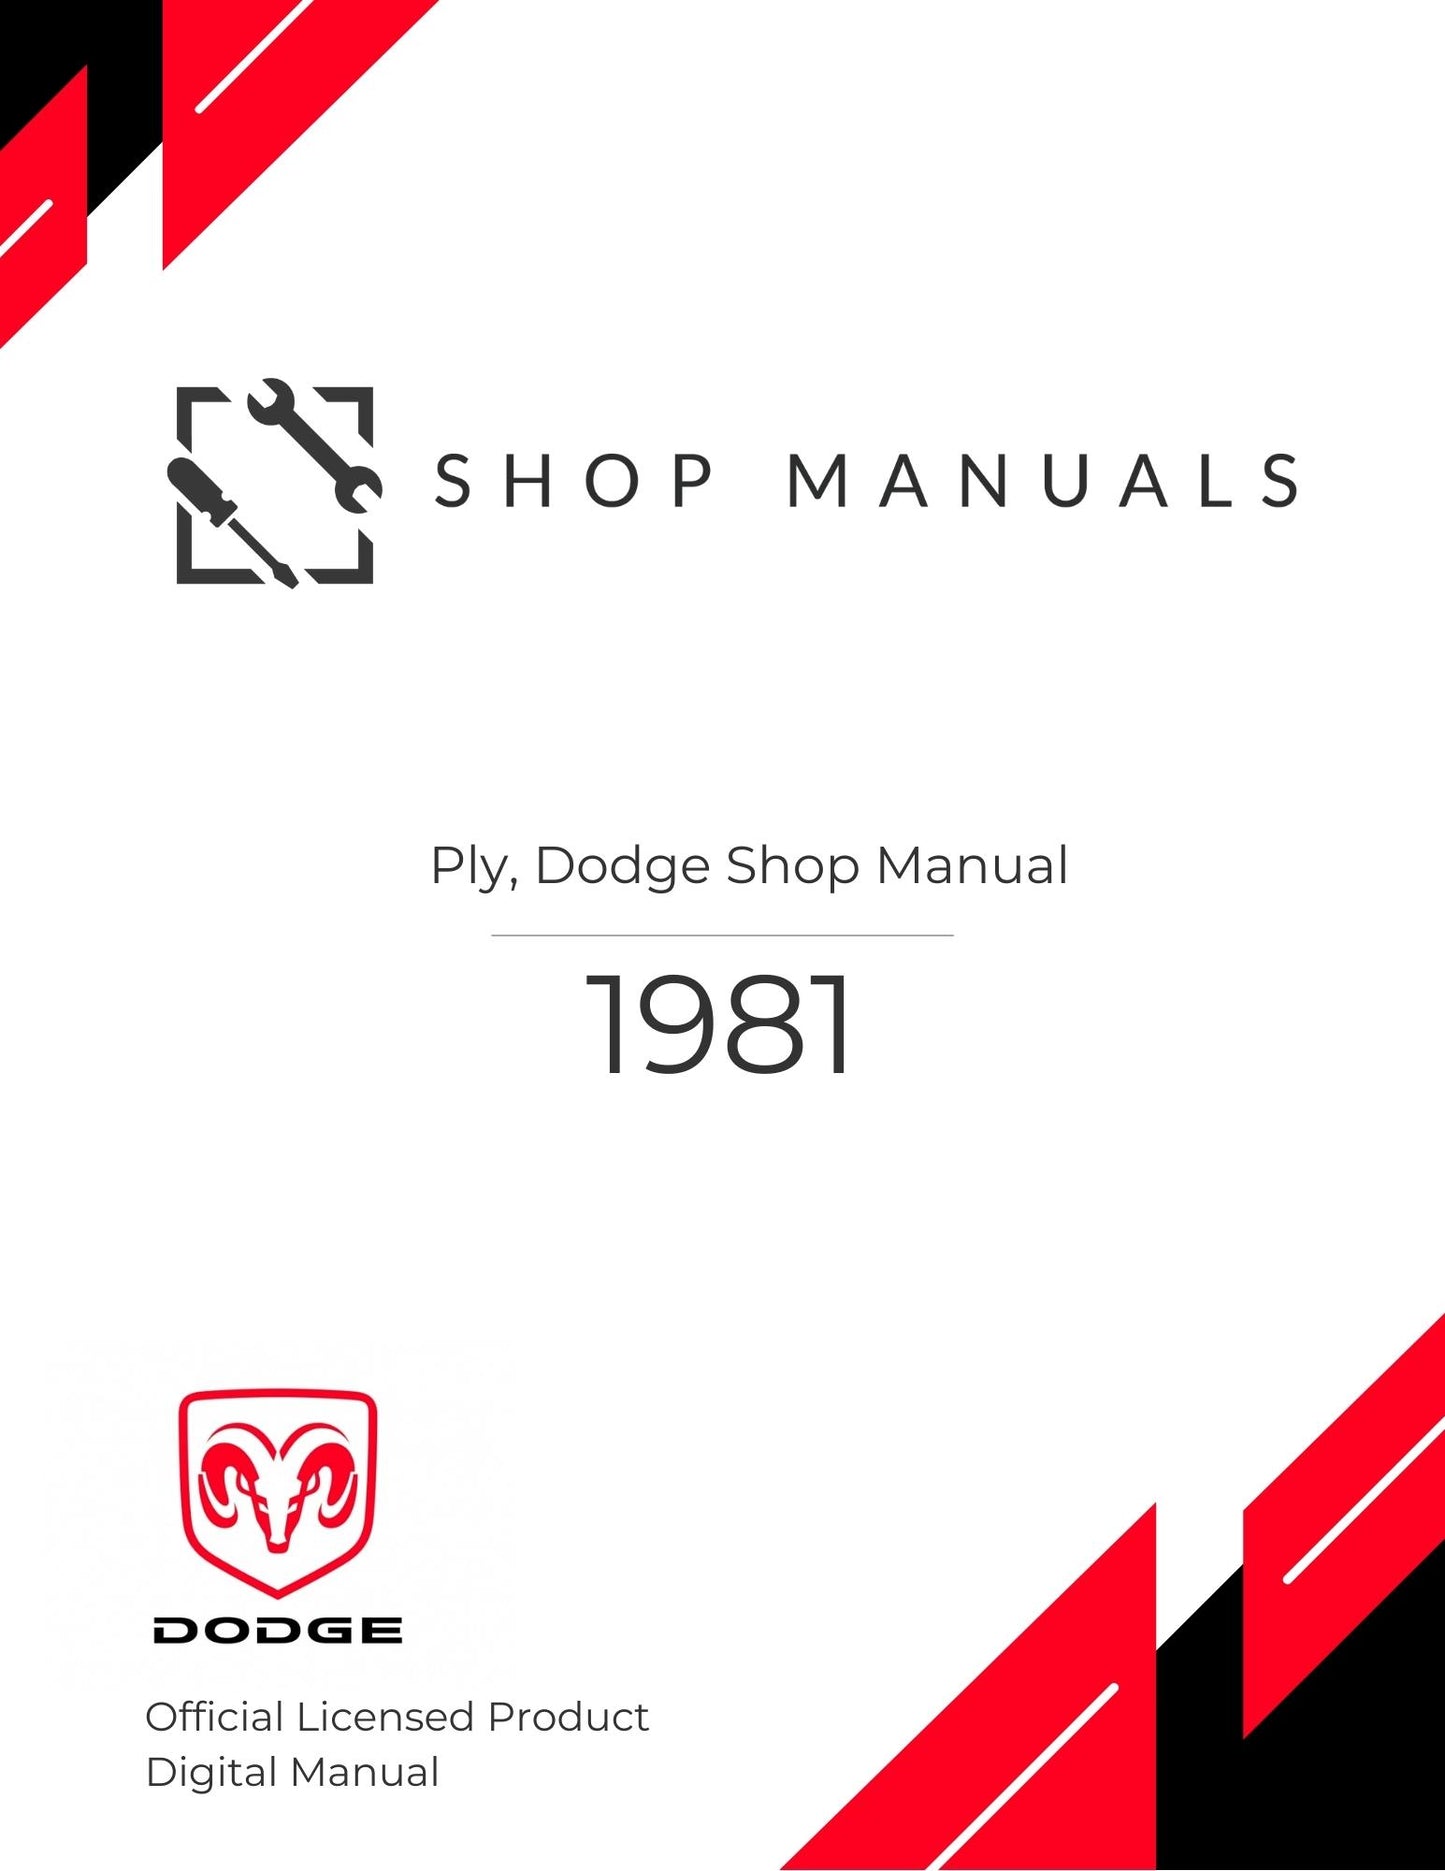 1981 Ply, Dodge Shop Manual